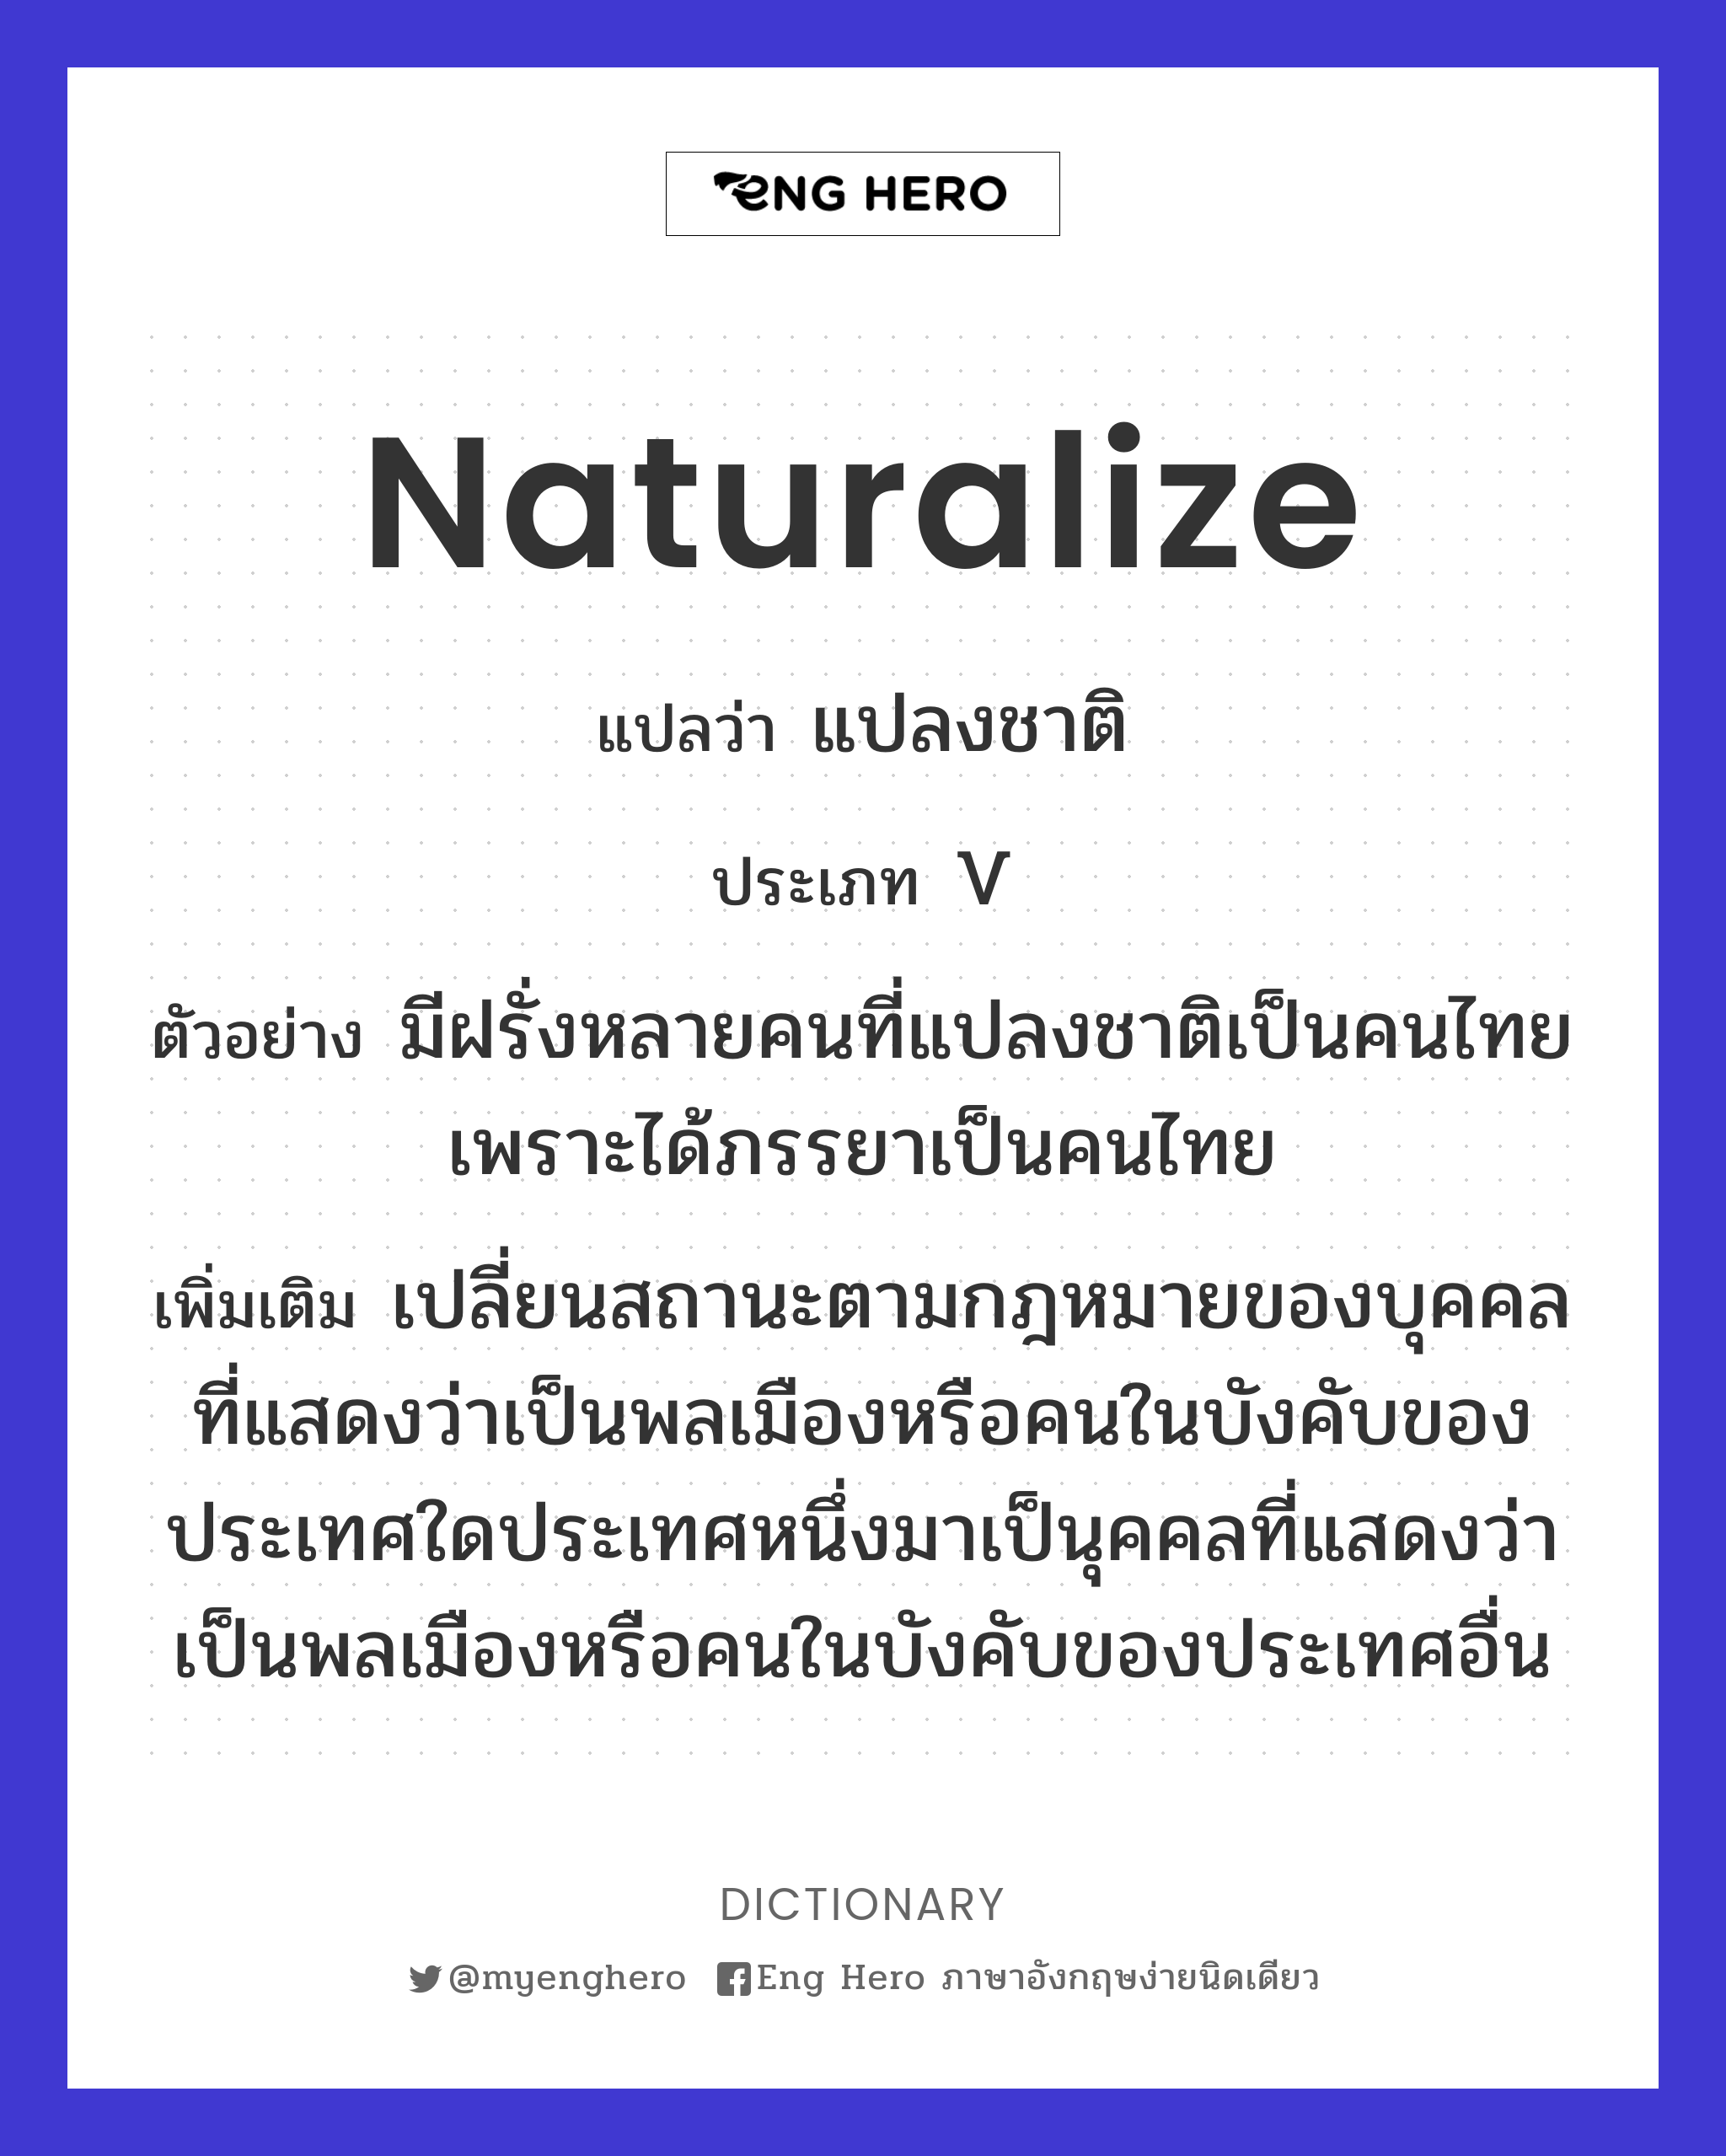 naturalize